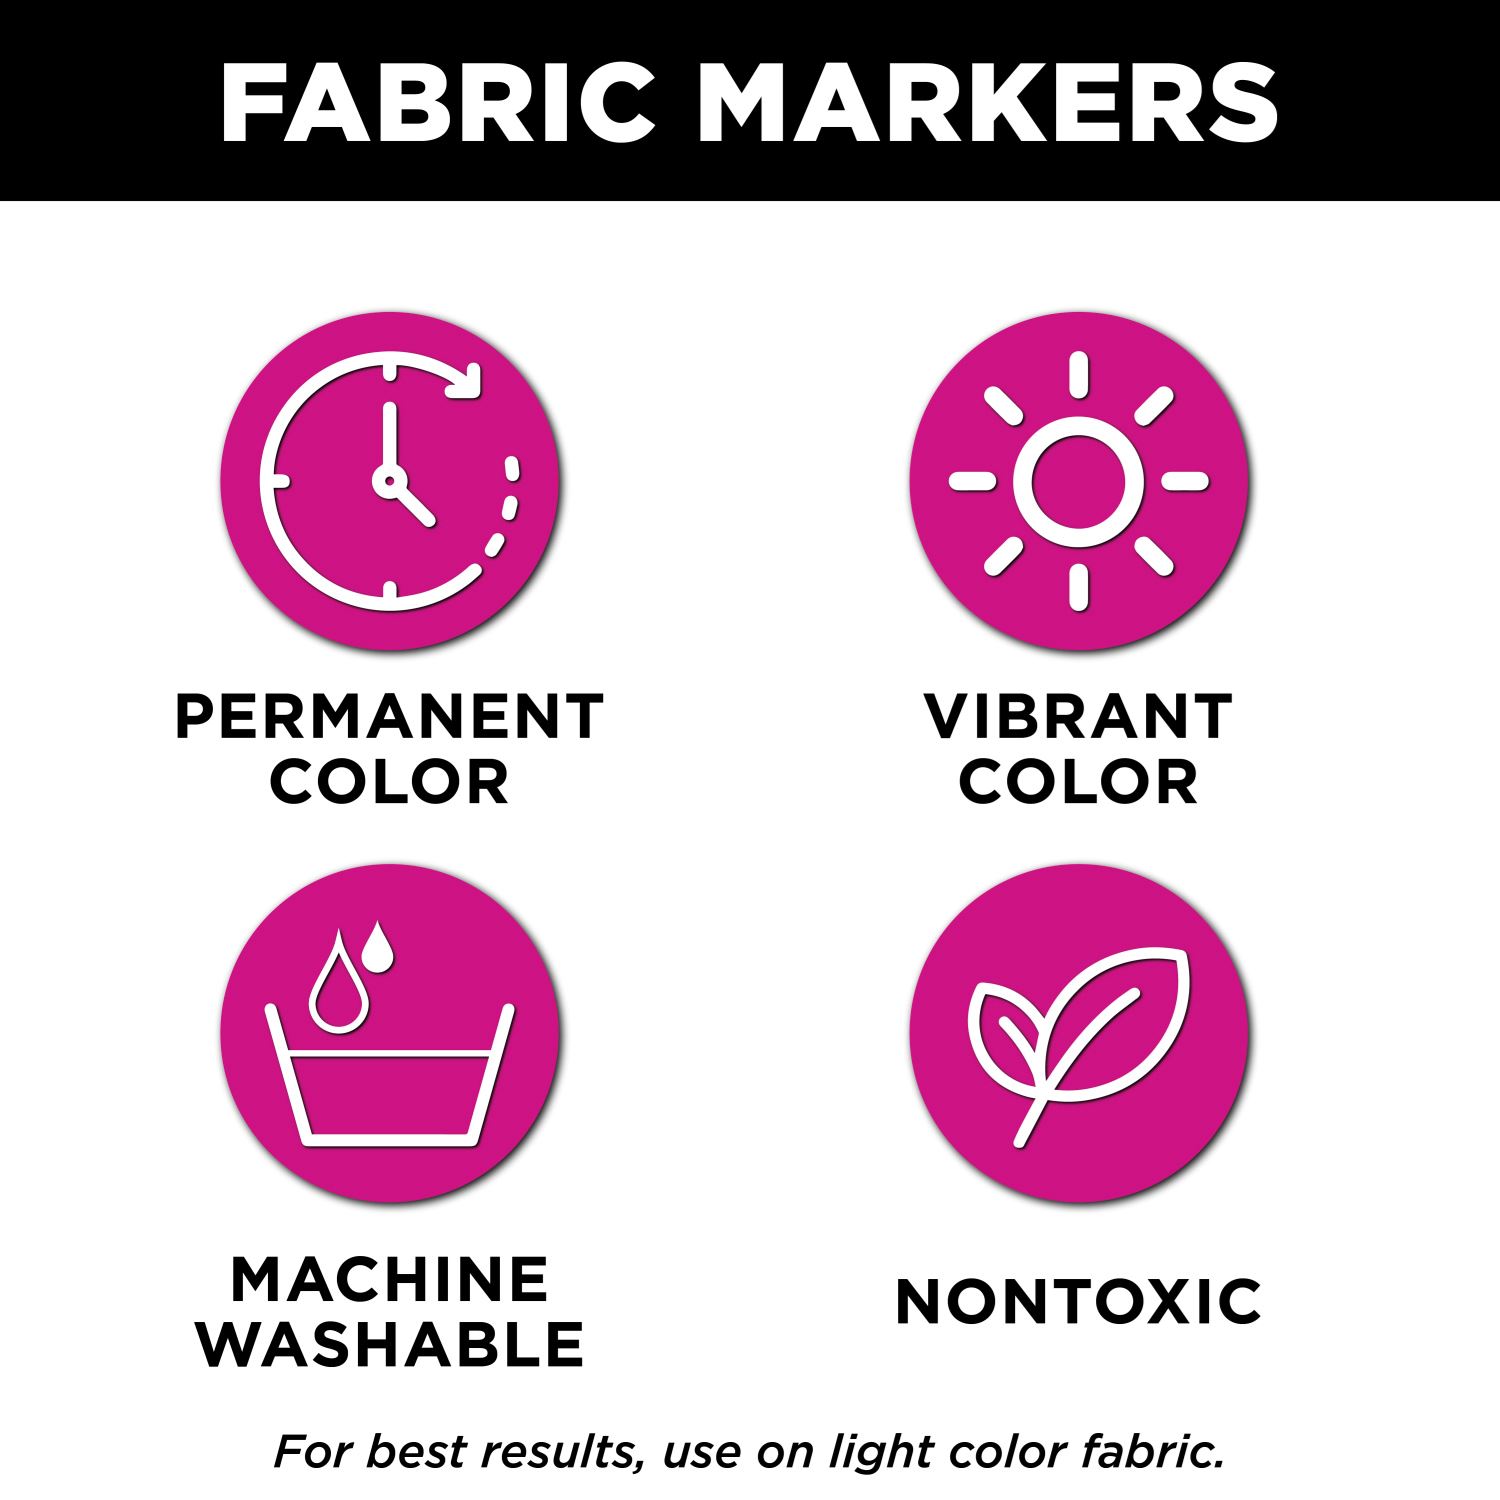 Tulip® 20-Pc. Fine Tip Rainbow Fabric Markers